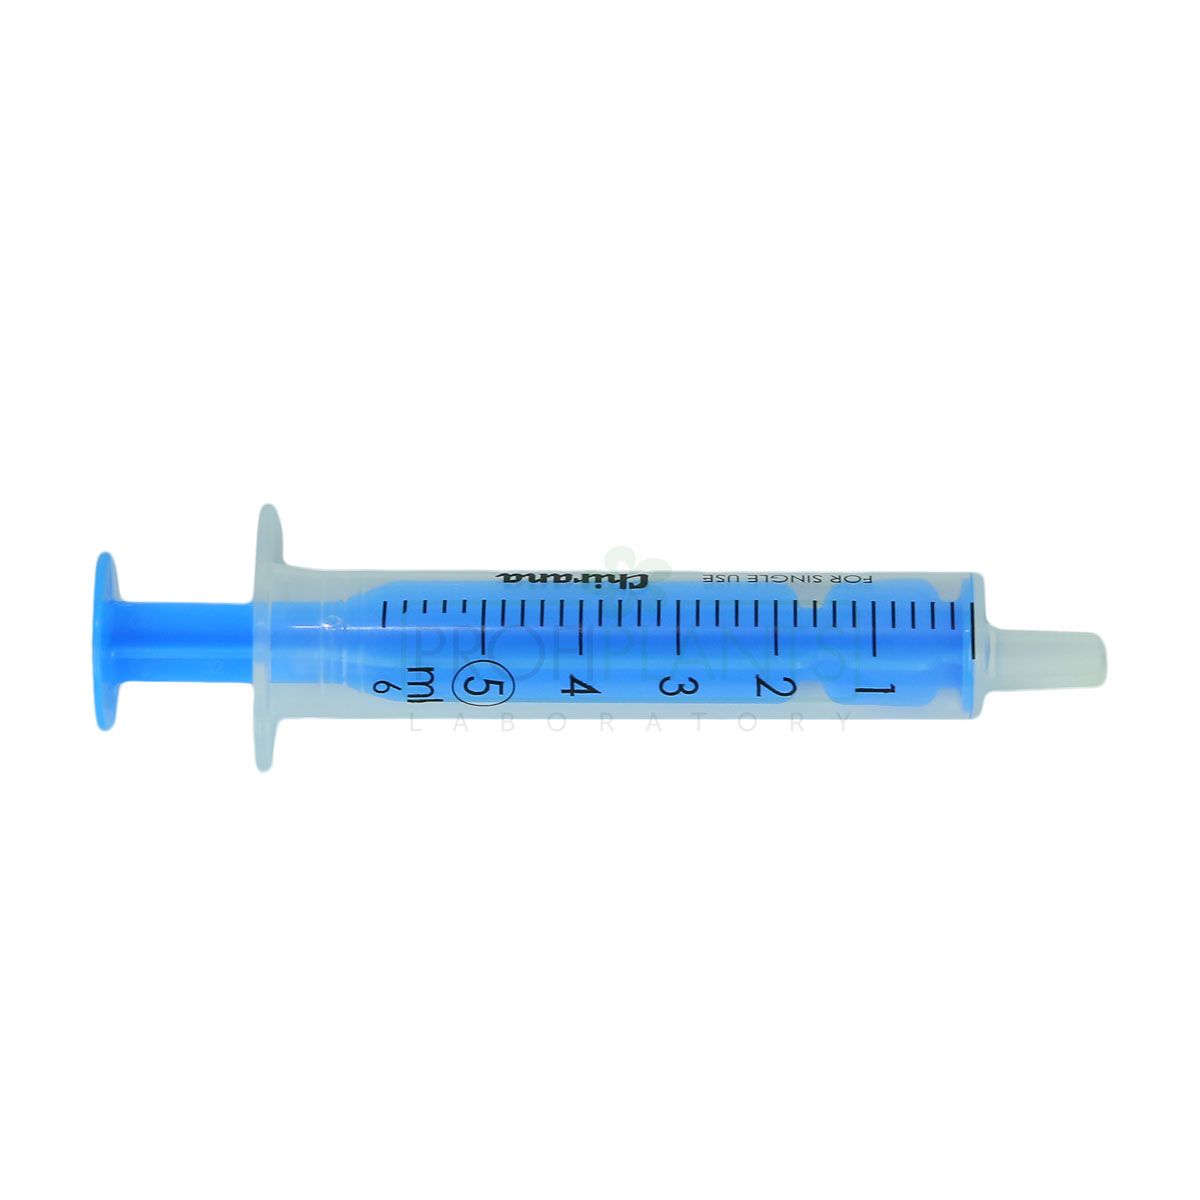 5 ml syringe plunger - 1pc Chirana